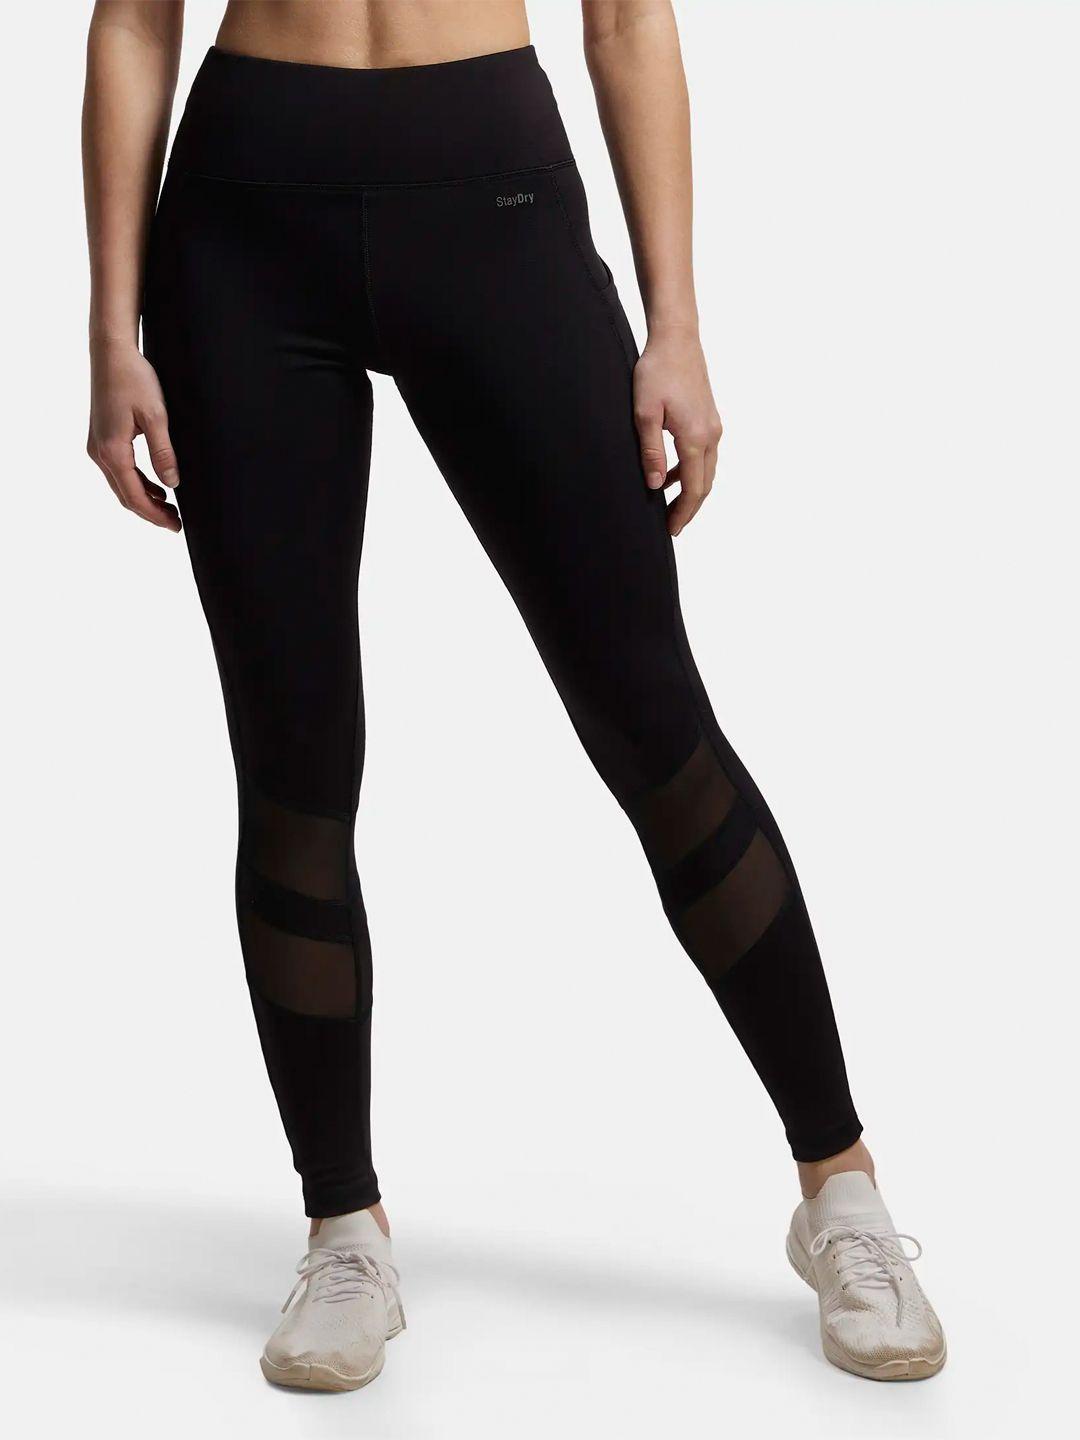 jockey-women-black-solid-slim-fit-ankle-length-leggings